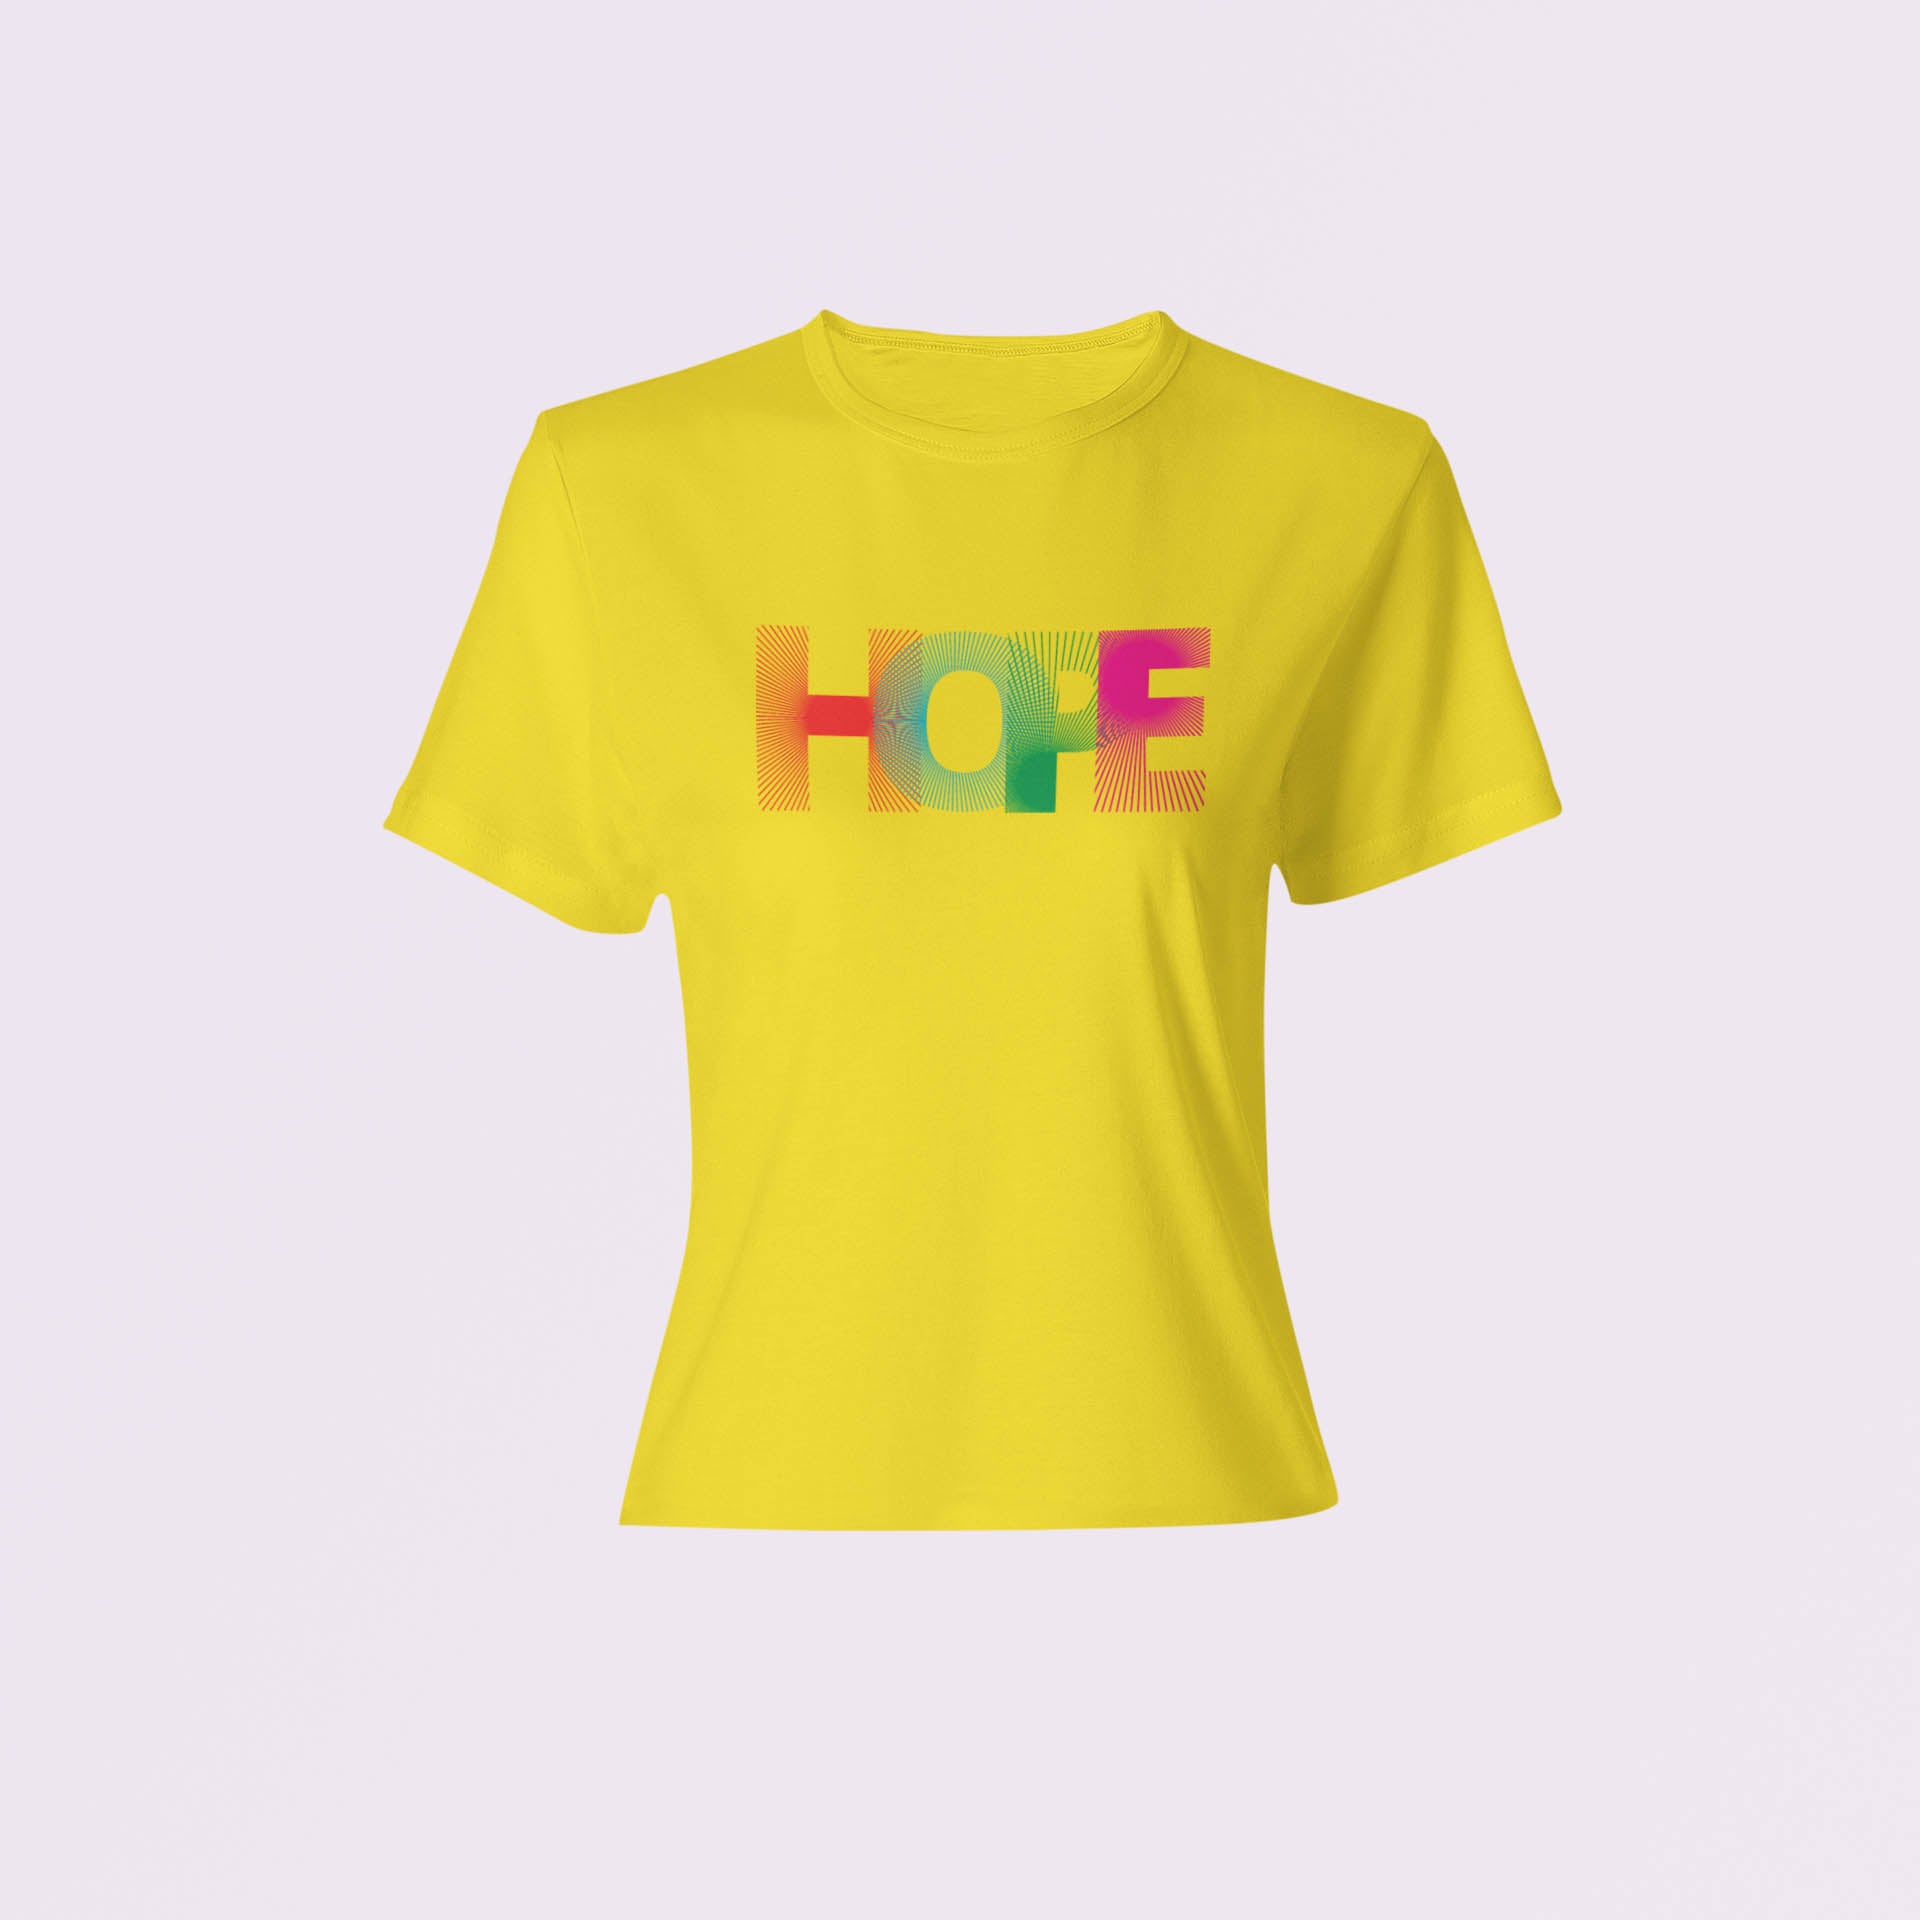 Hope Women's Cotton T-Shirt